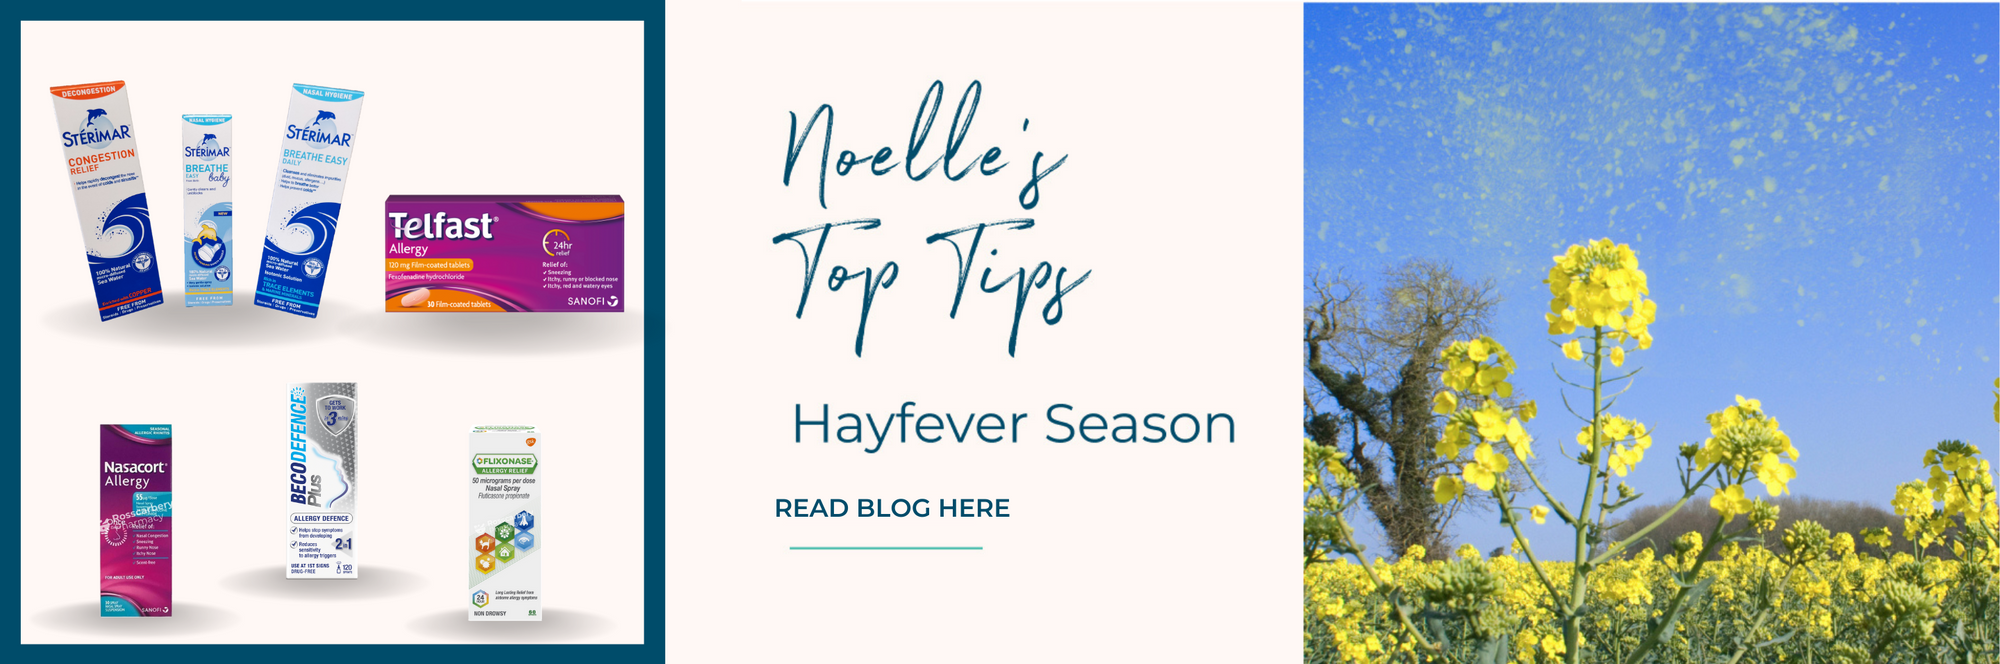 Hayfever Season Blog